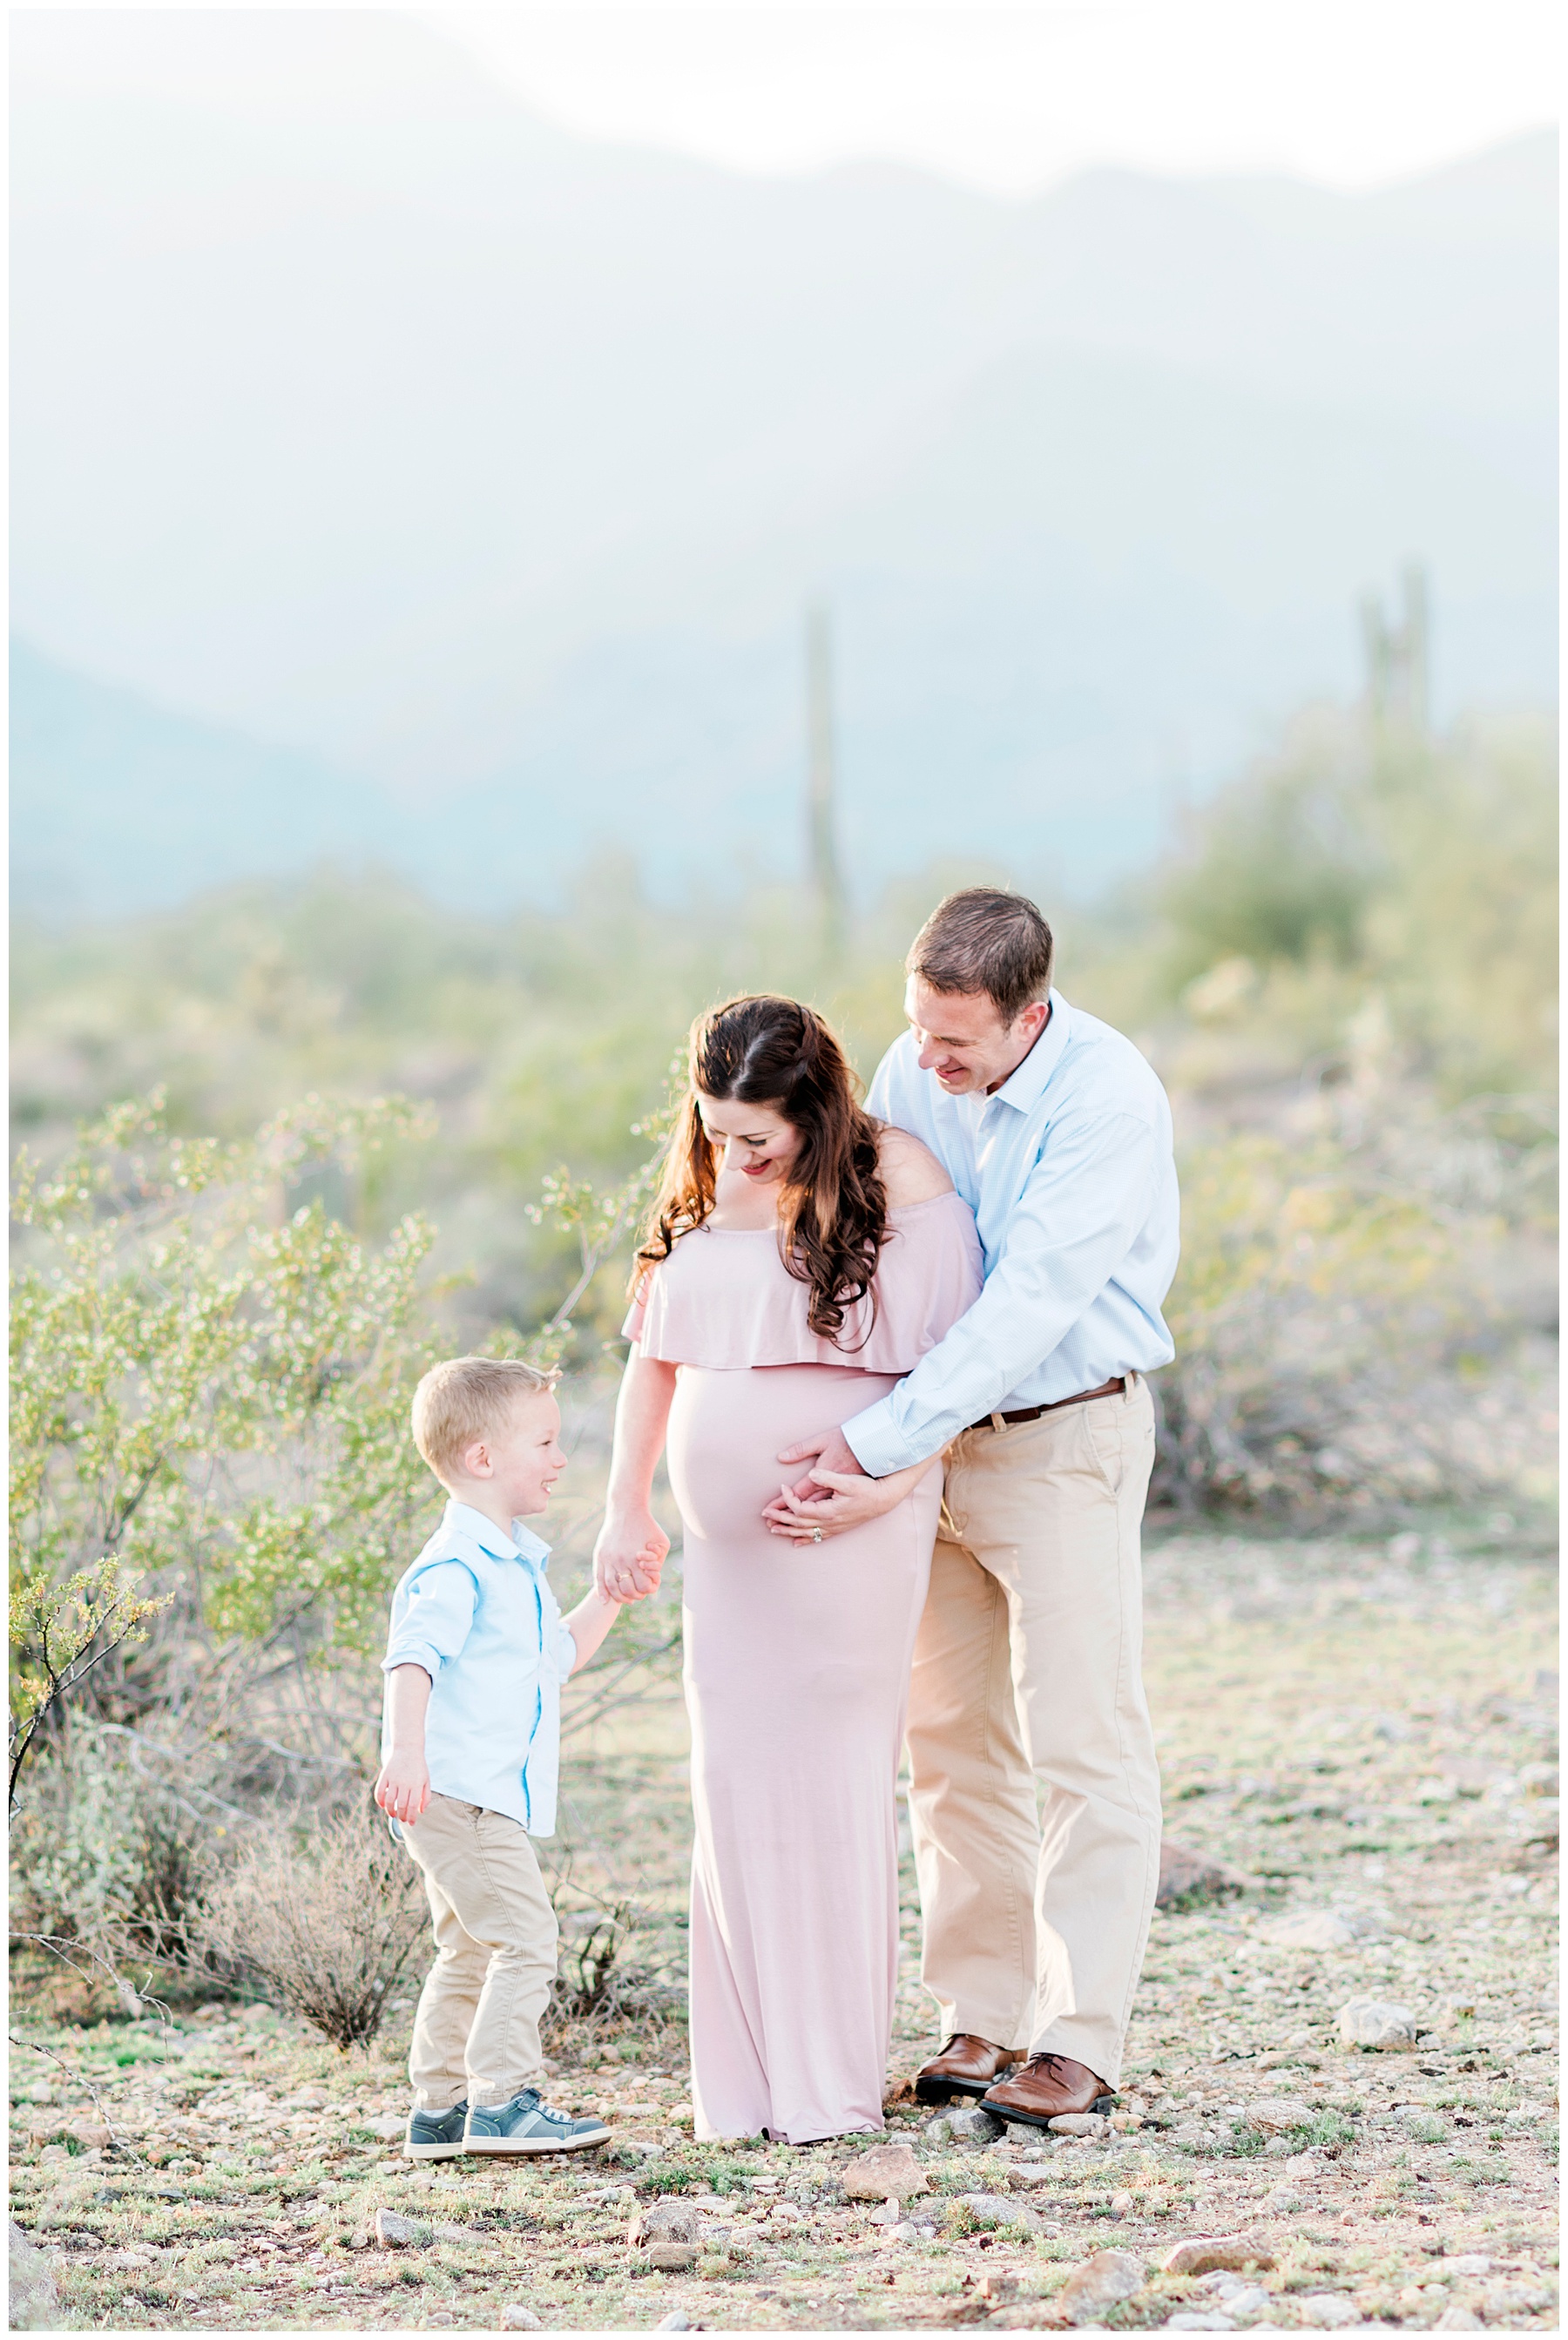 Wheeler's-Maternity-Family-Session-Waddell-Arizona-Ashley-Flug-Photography02.jpg